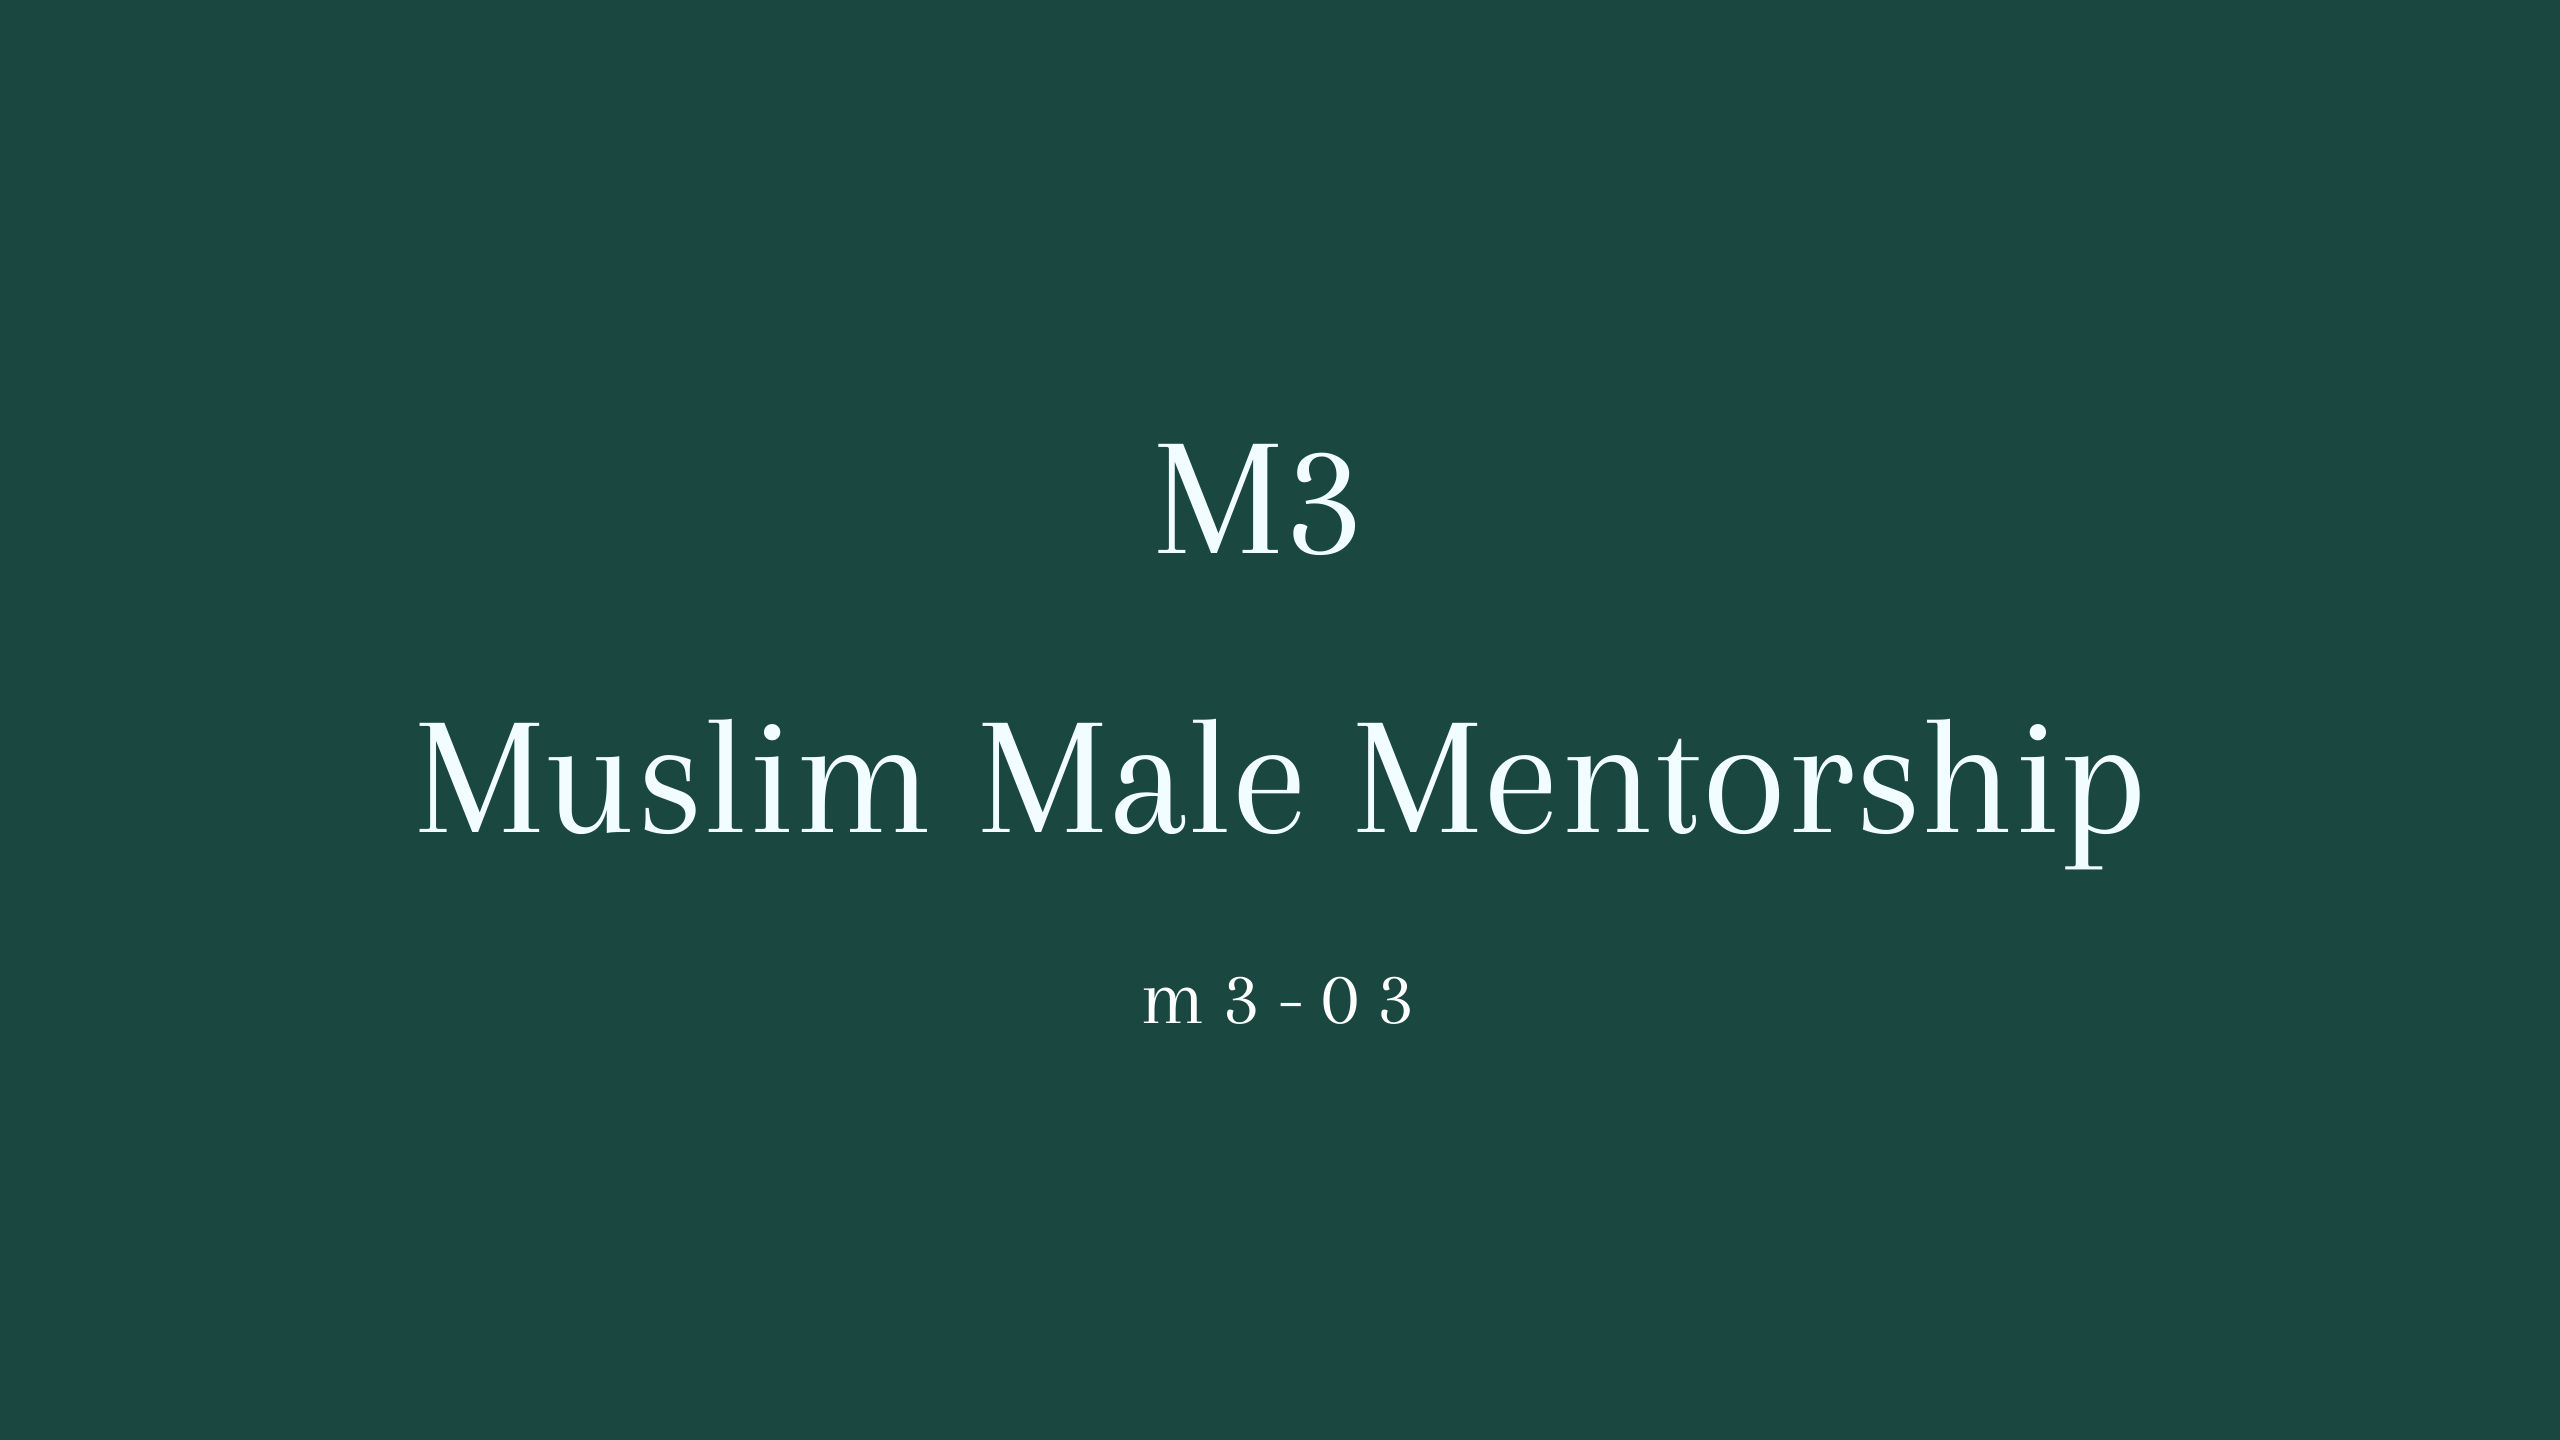 M3-02: MUSLIM MALE MENTORSHIP